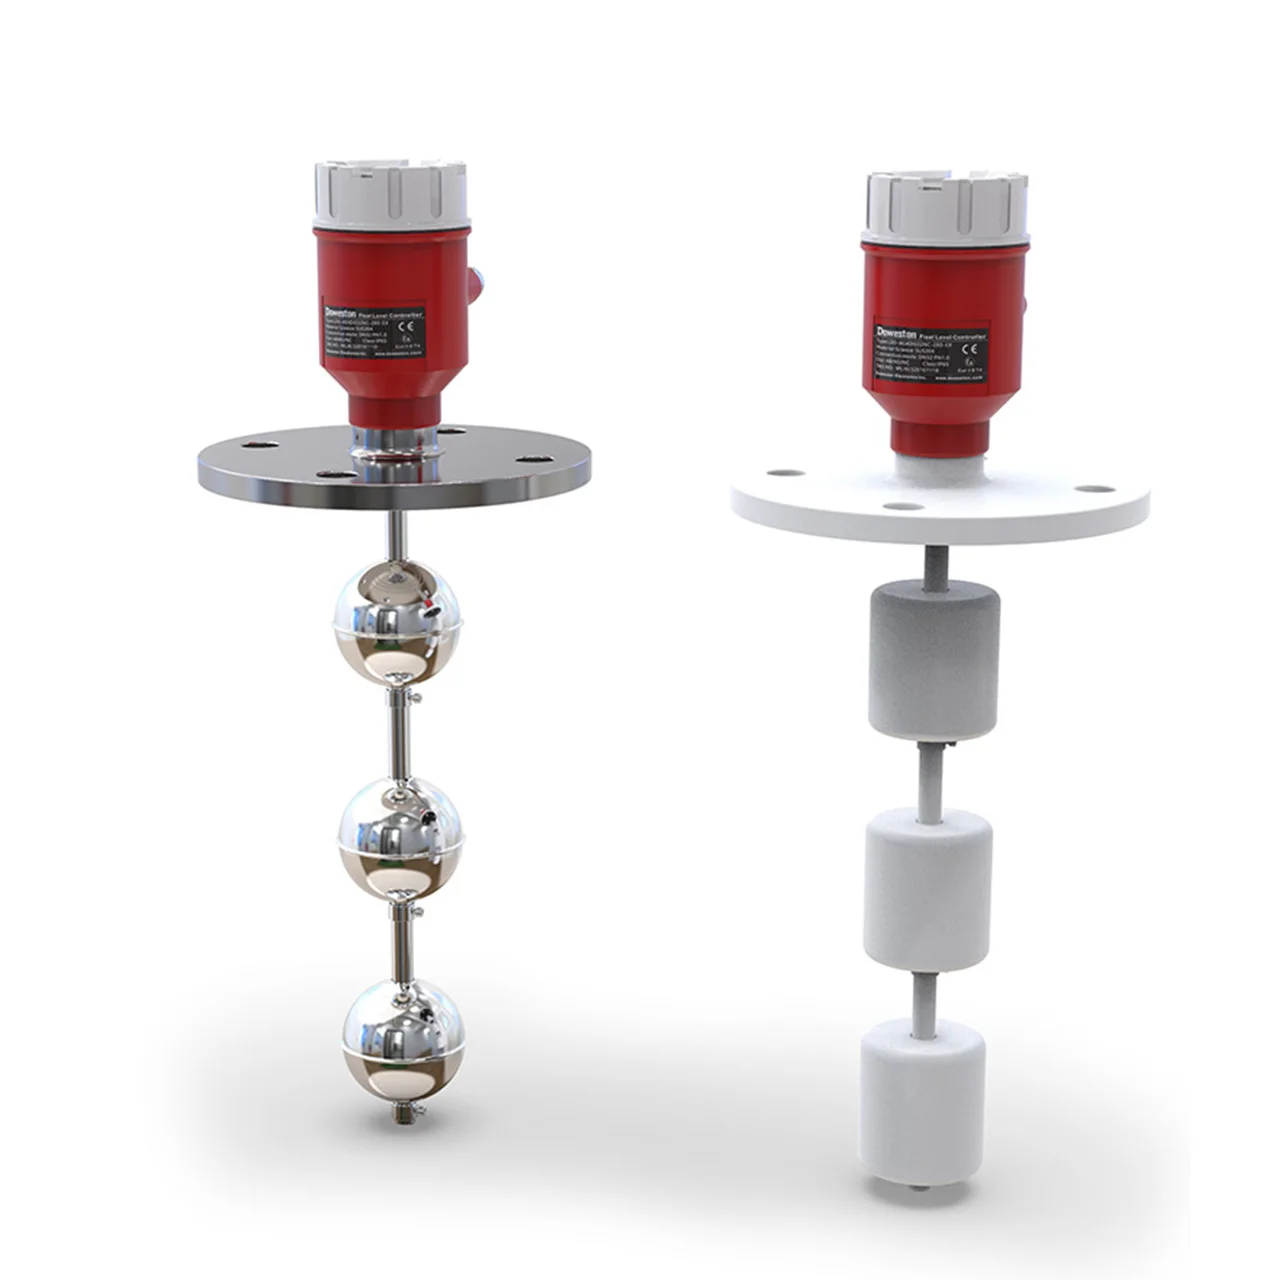 

LG-400 series liquid level sensor Float type oil-water interface instrument